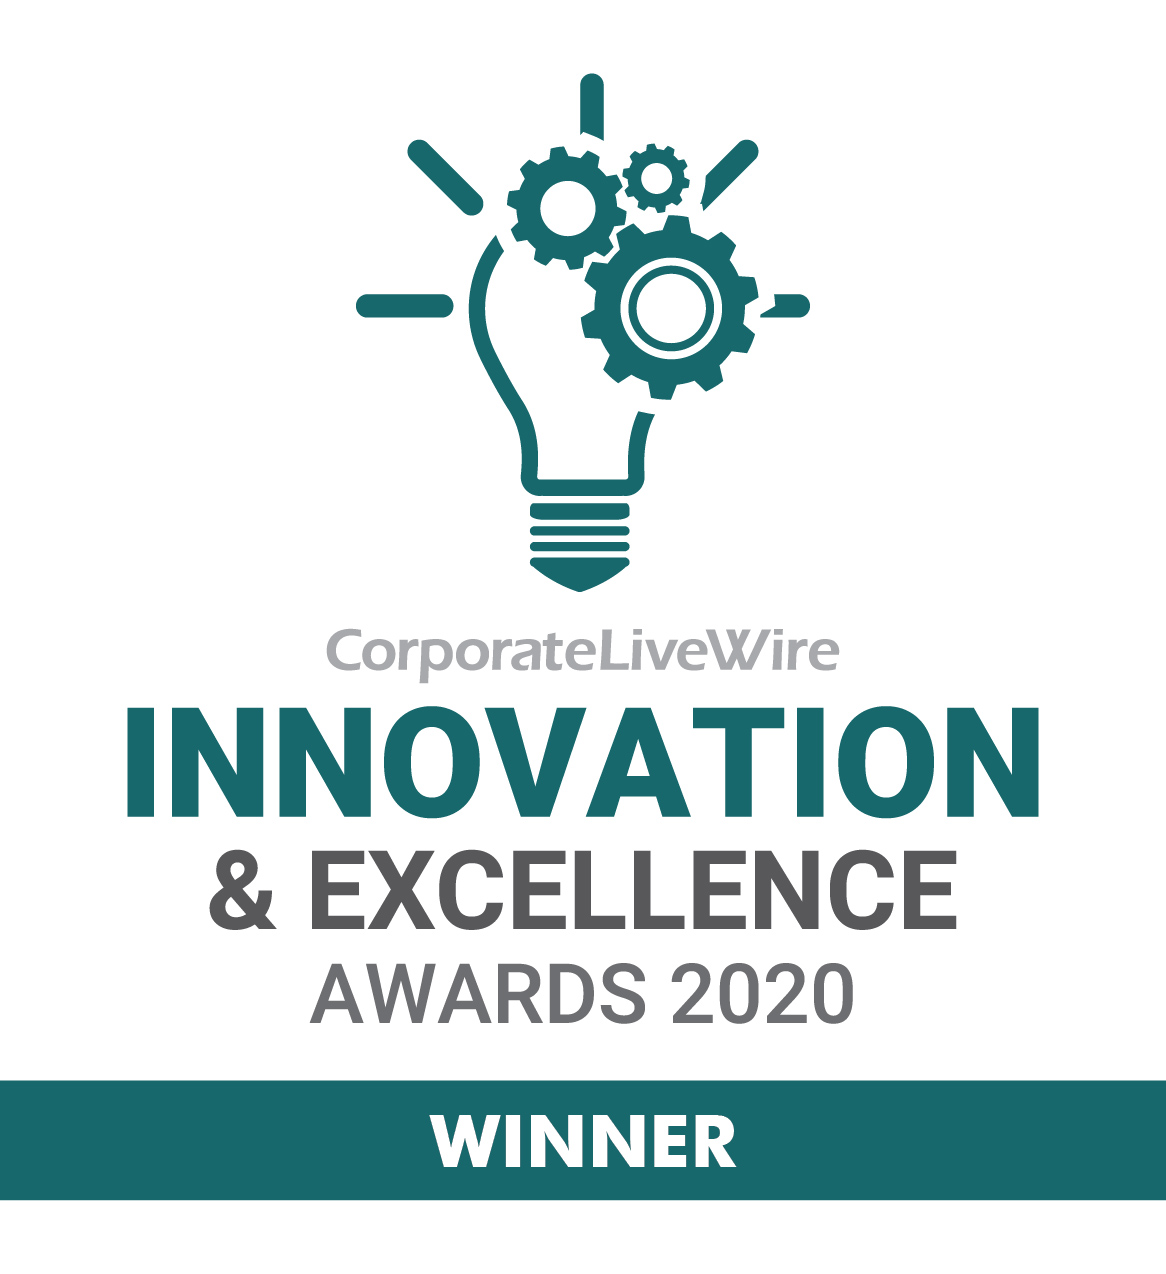 Innovation & Excellence Awards 2020 Winner